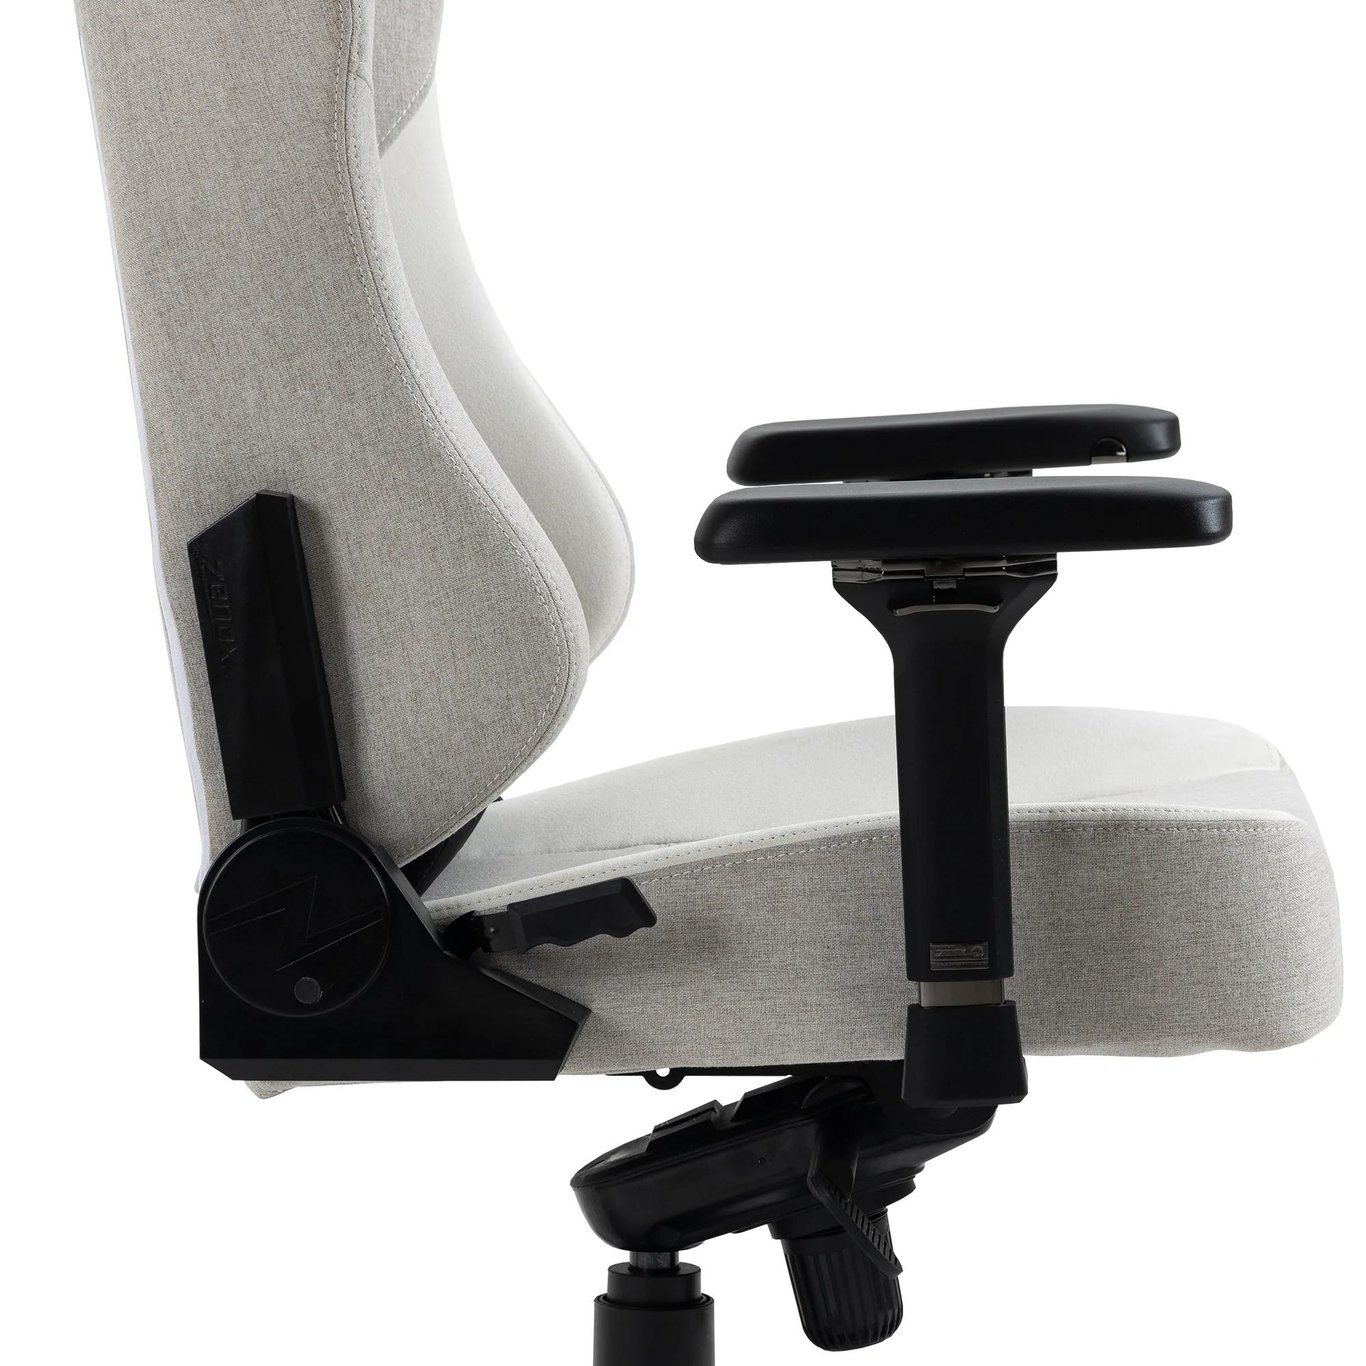 Zenox Spectre-MK2 Racing Chair  - Fabric/Light Grey /-6